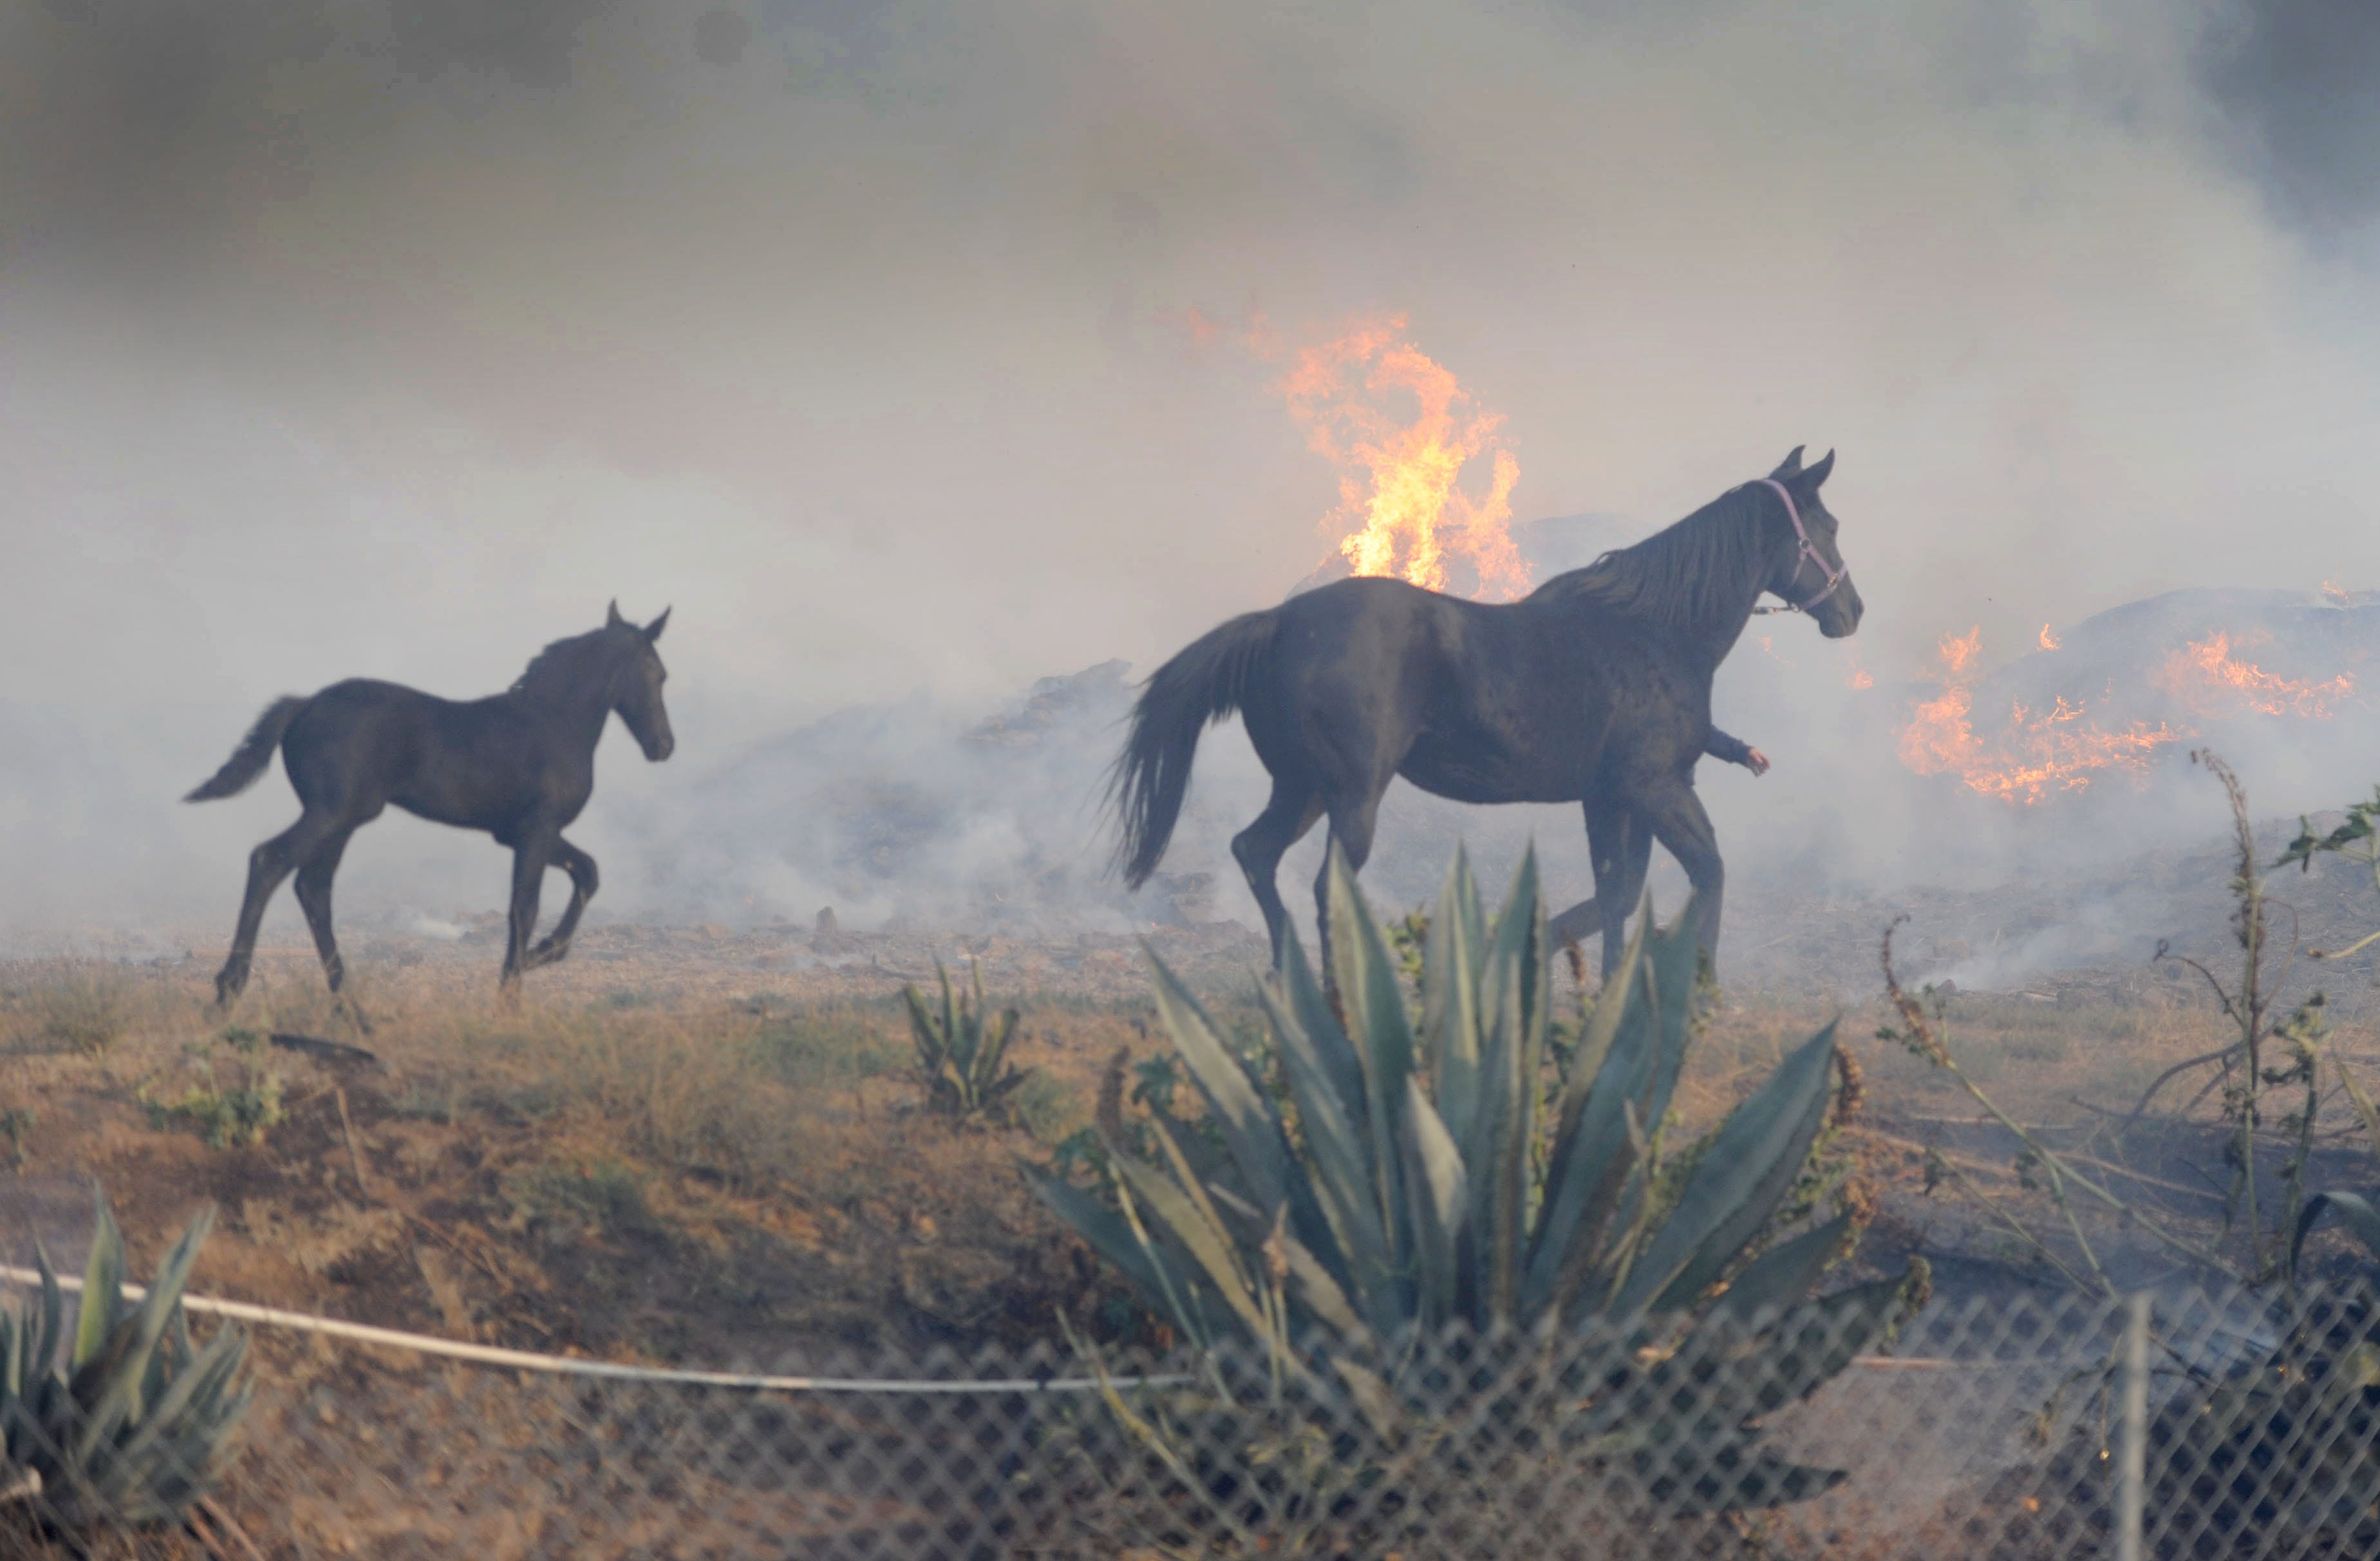 bcc13d46-1c2d-440b-8c11-f4c16668c09f-easy_fire_2 Horse owners scramble to evacuate their animals ahead of California fire